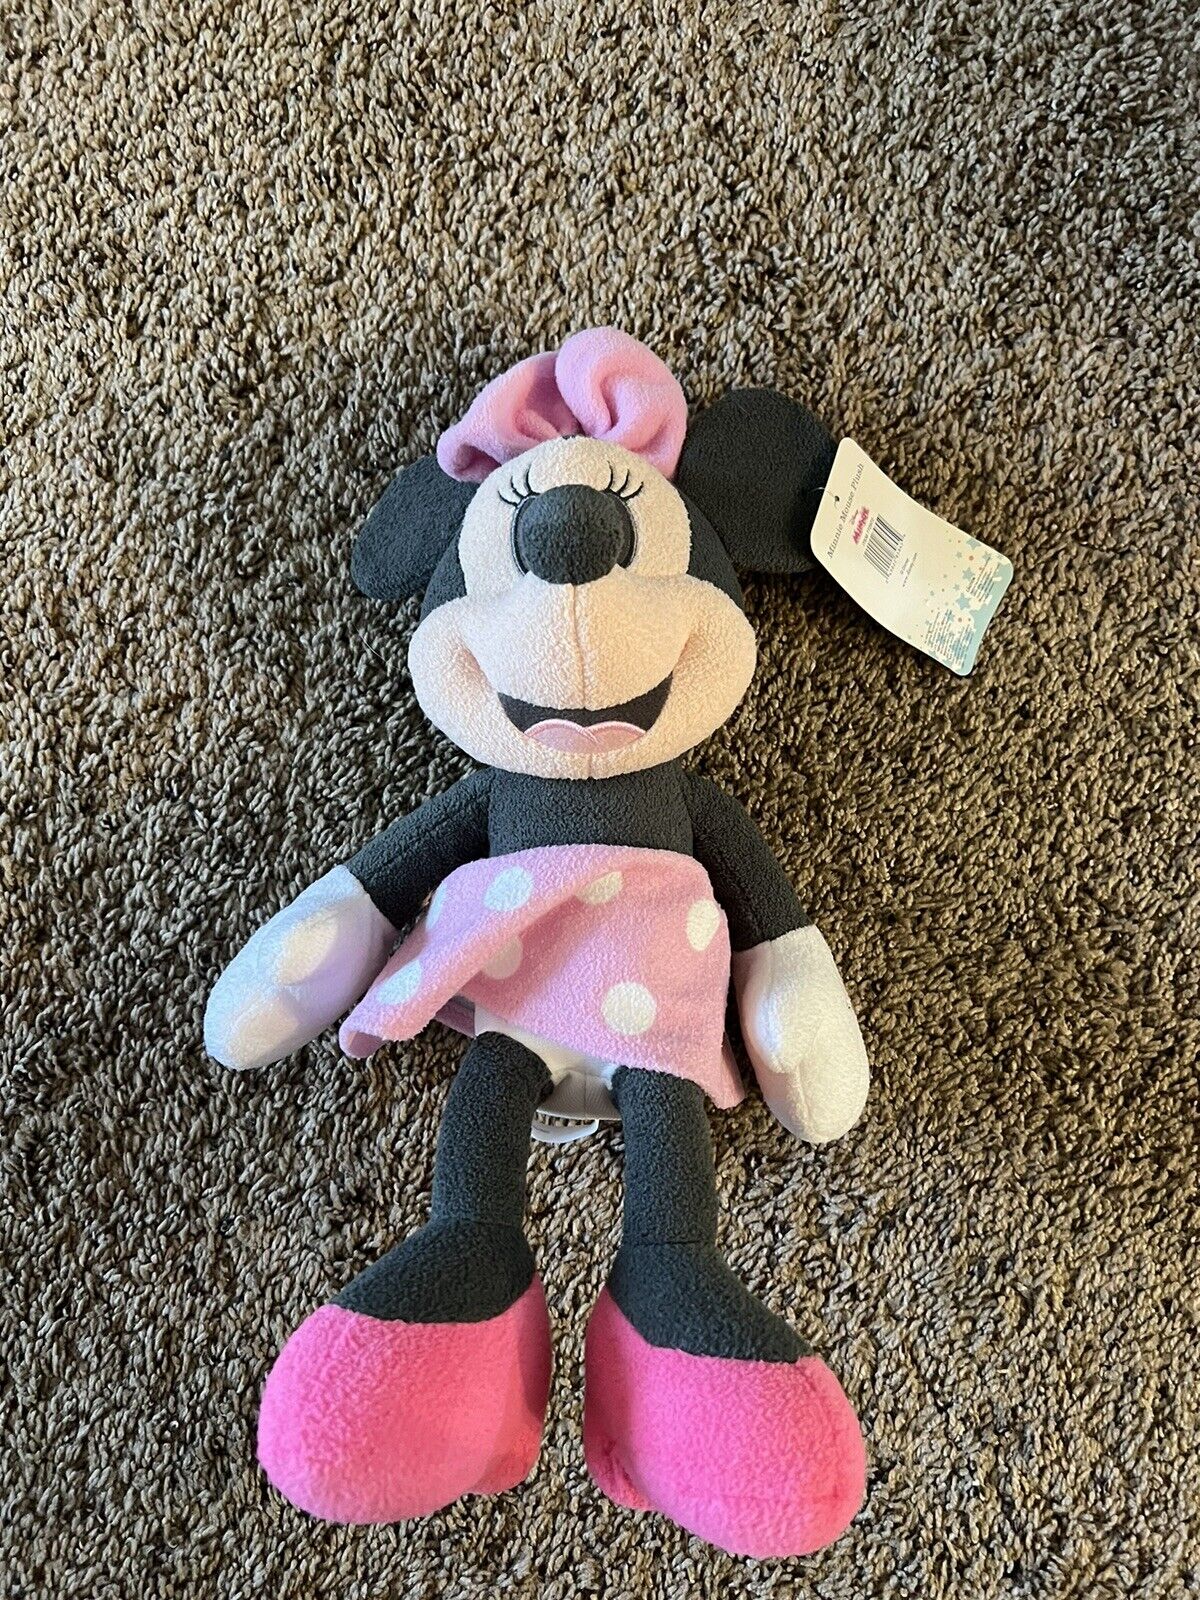 Disney Baby Minnie Mouse Plush 12 inch Stuffed Animal Pal